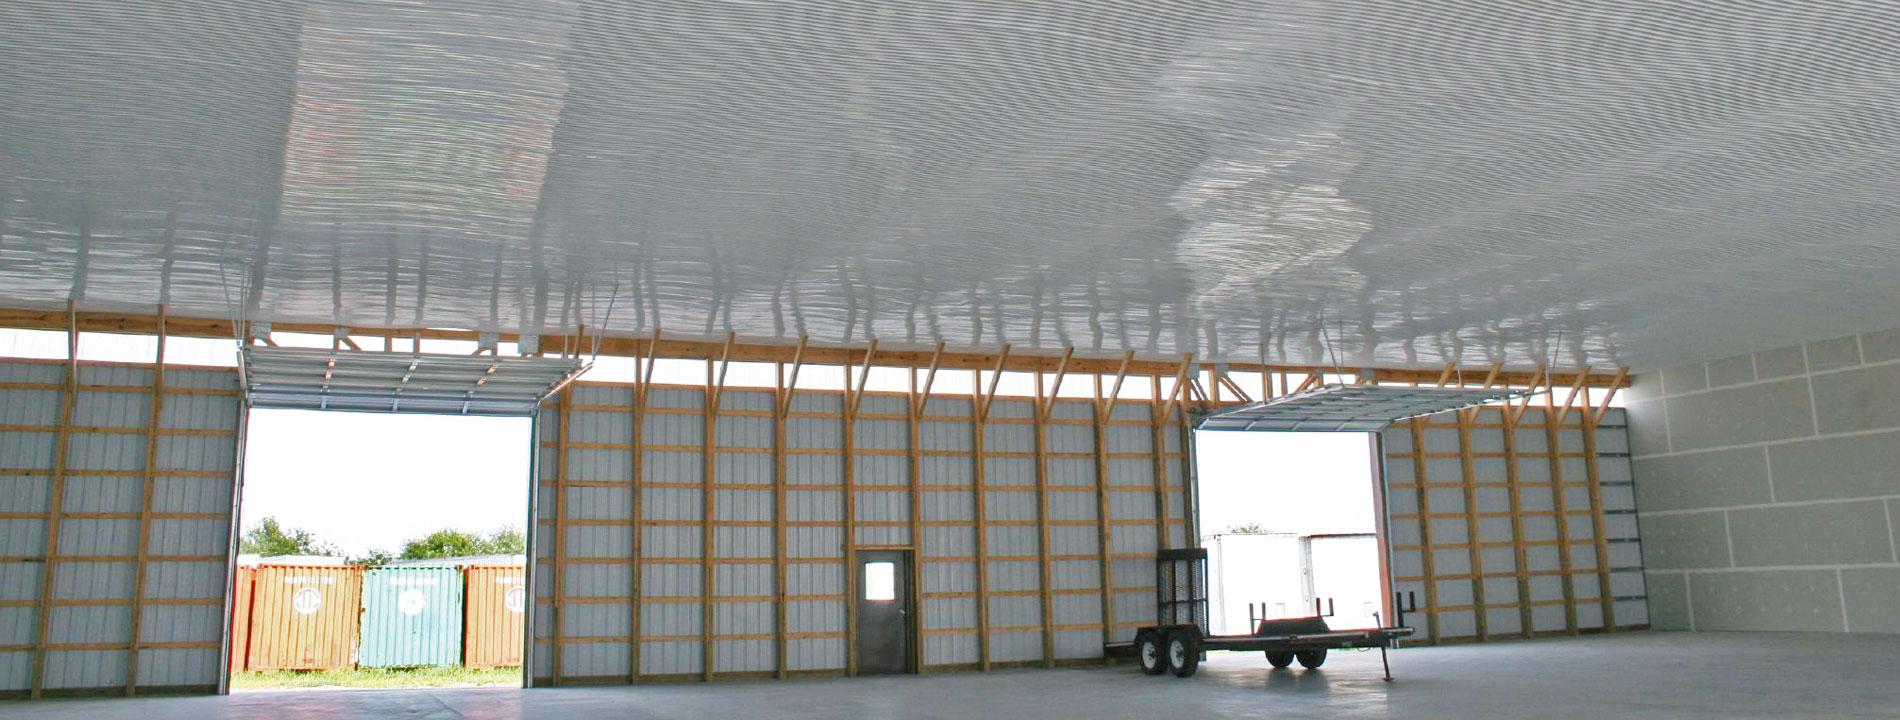 AG-TUF Warehouse Ceiling Cladding